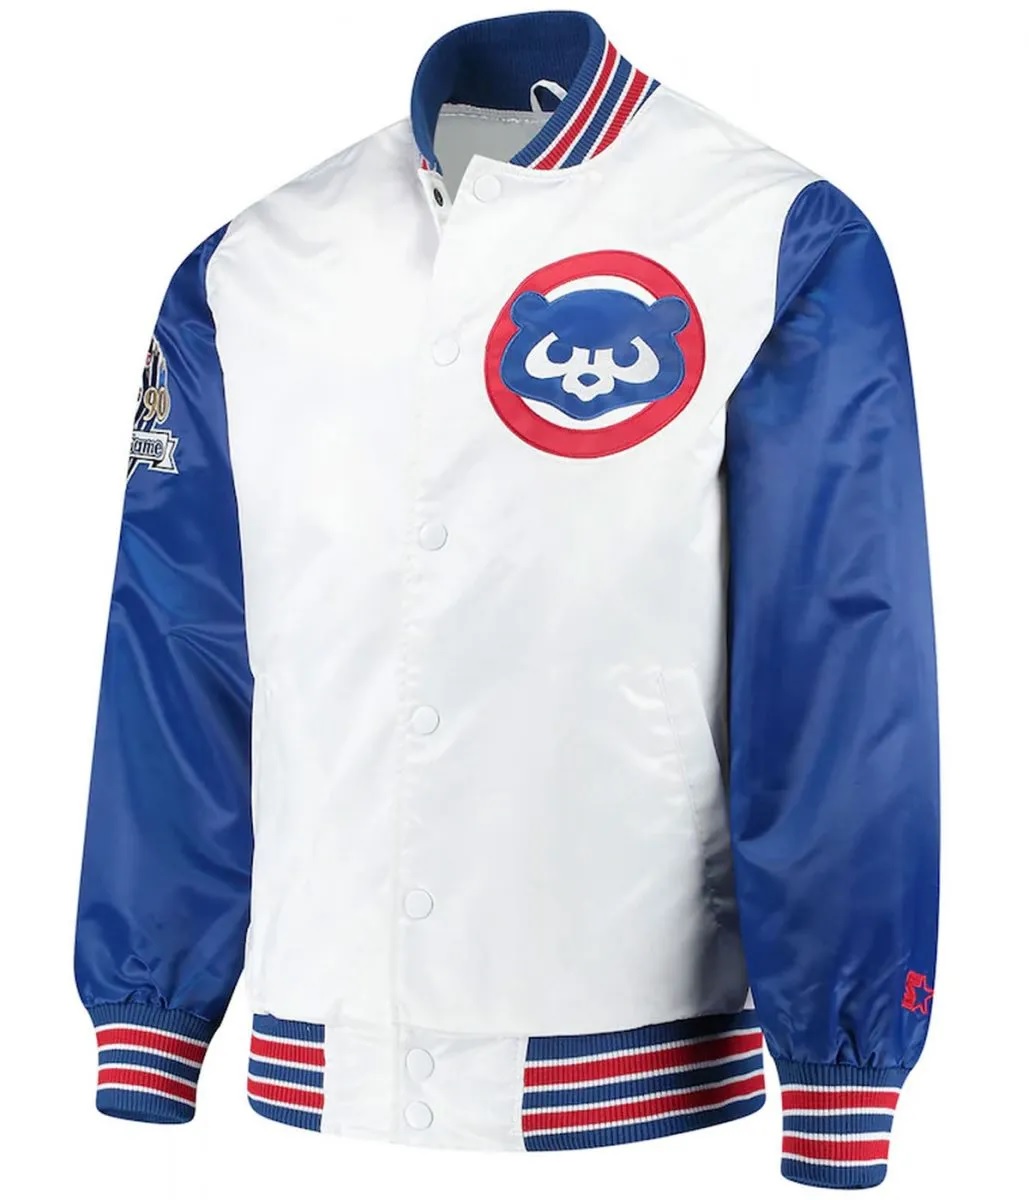 Varsity Chicago Cubs Satin Royal Blue and White Jacket